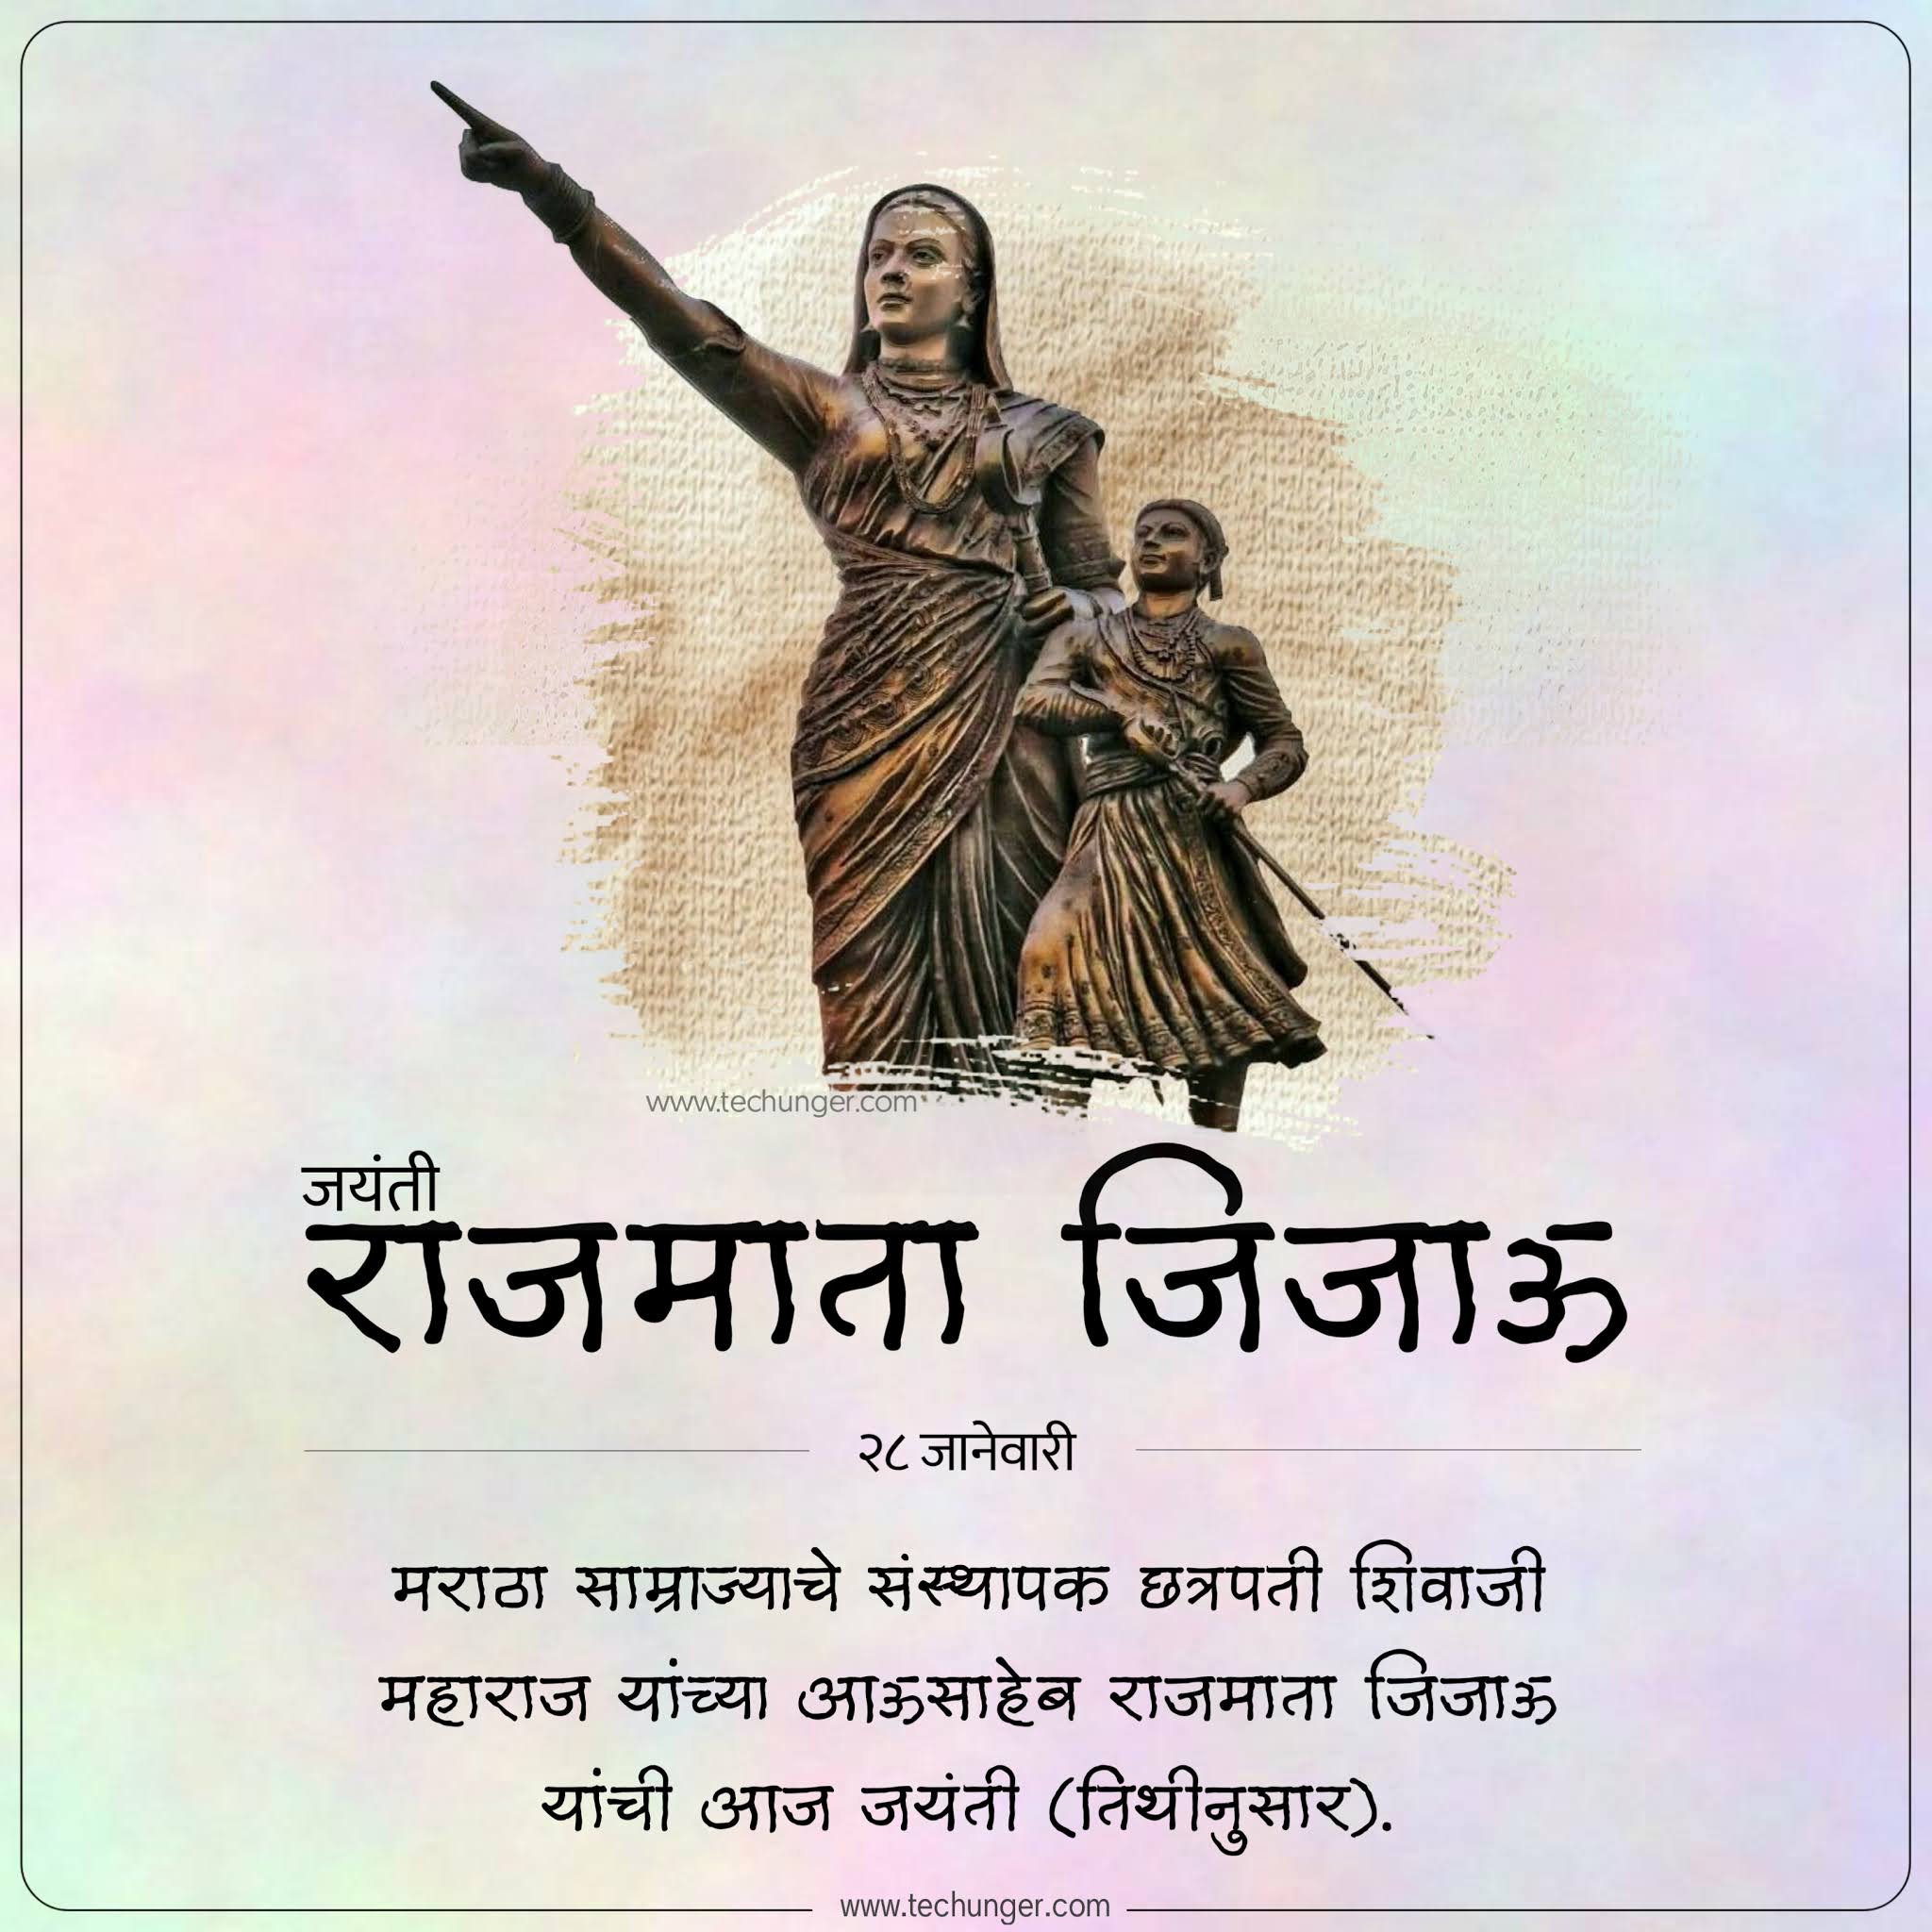 Rajmata jijau jayanti, राजमाता जिजाऊ जयंती, mother of shivaji maharaj, jijau birthday,free status, techunger, Saurabh Chaudhari, 28 January 2021